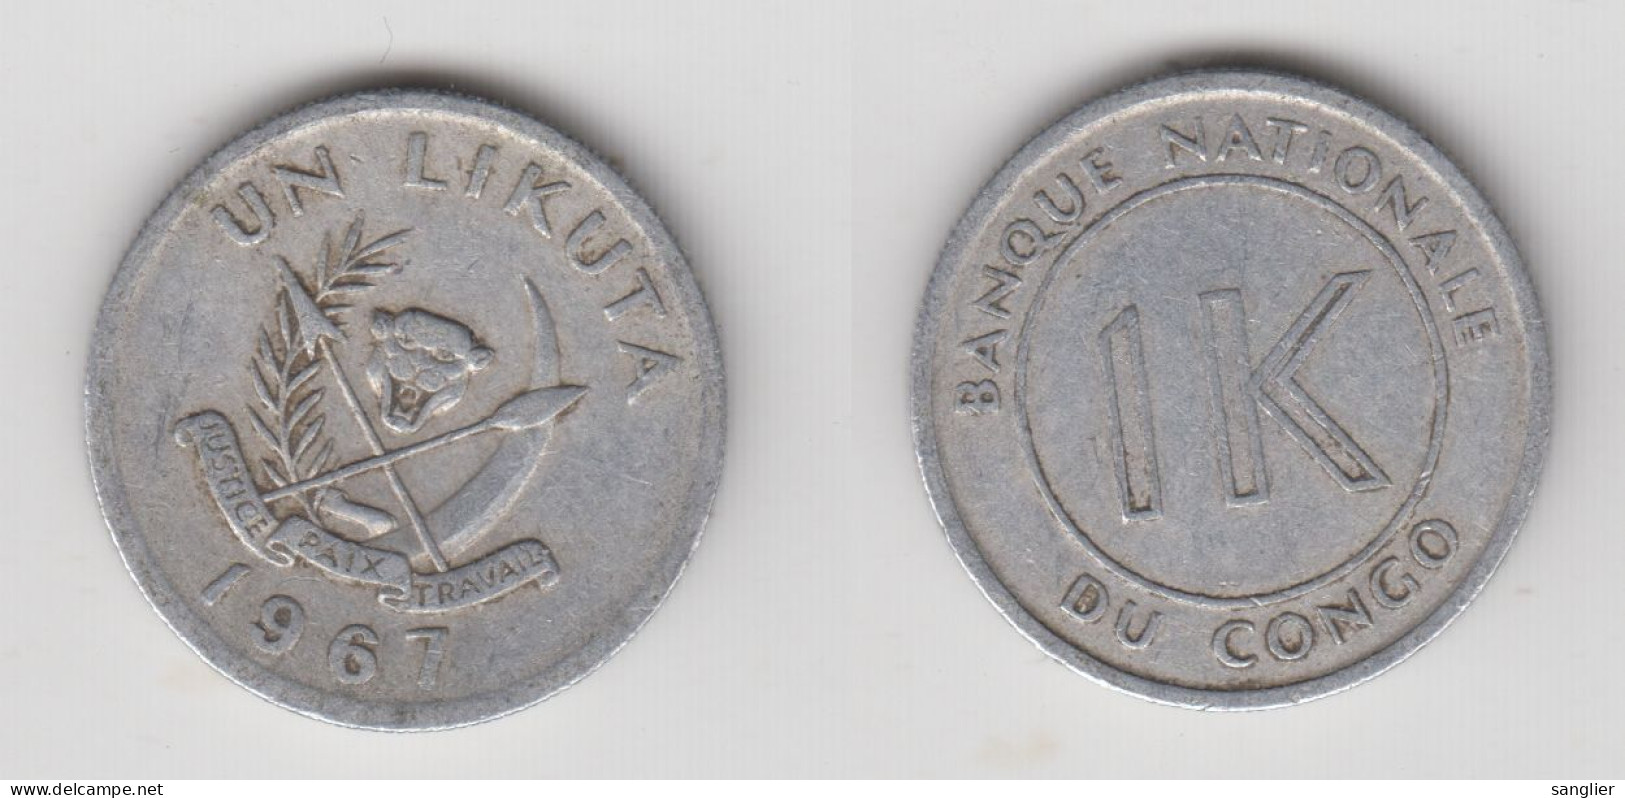 1 LIKUTA 1967 - Congo (Republic 1960)